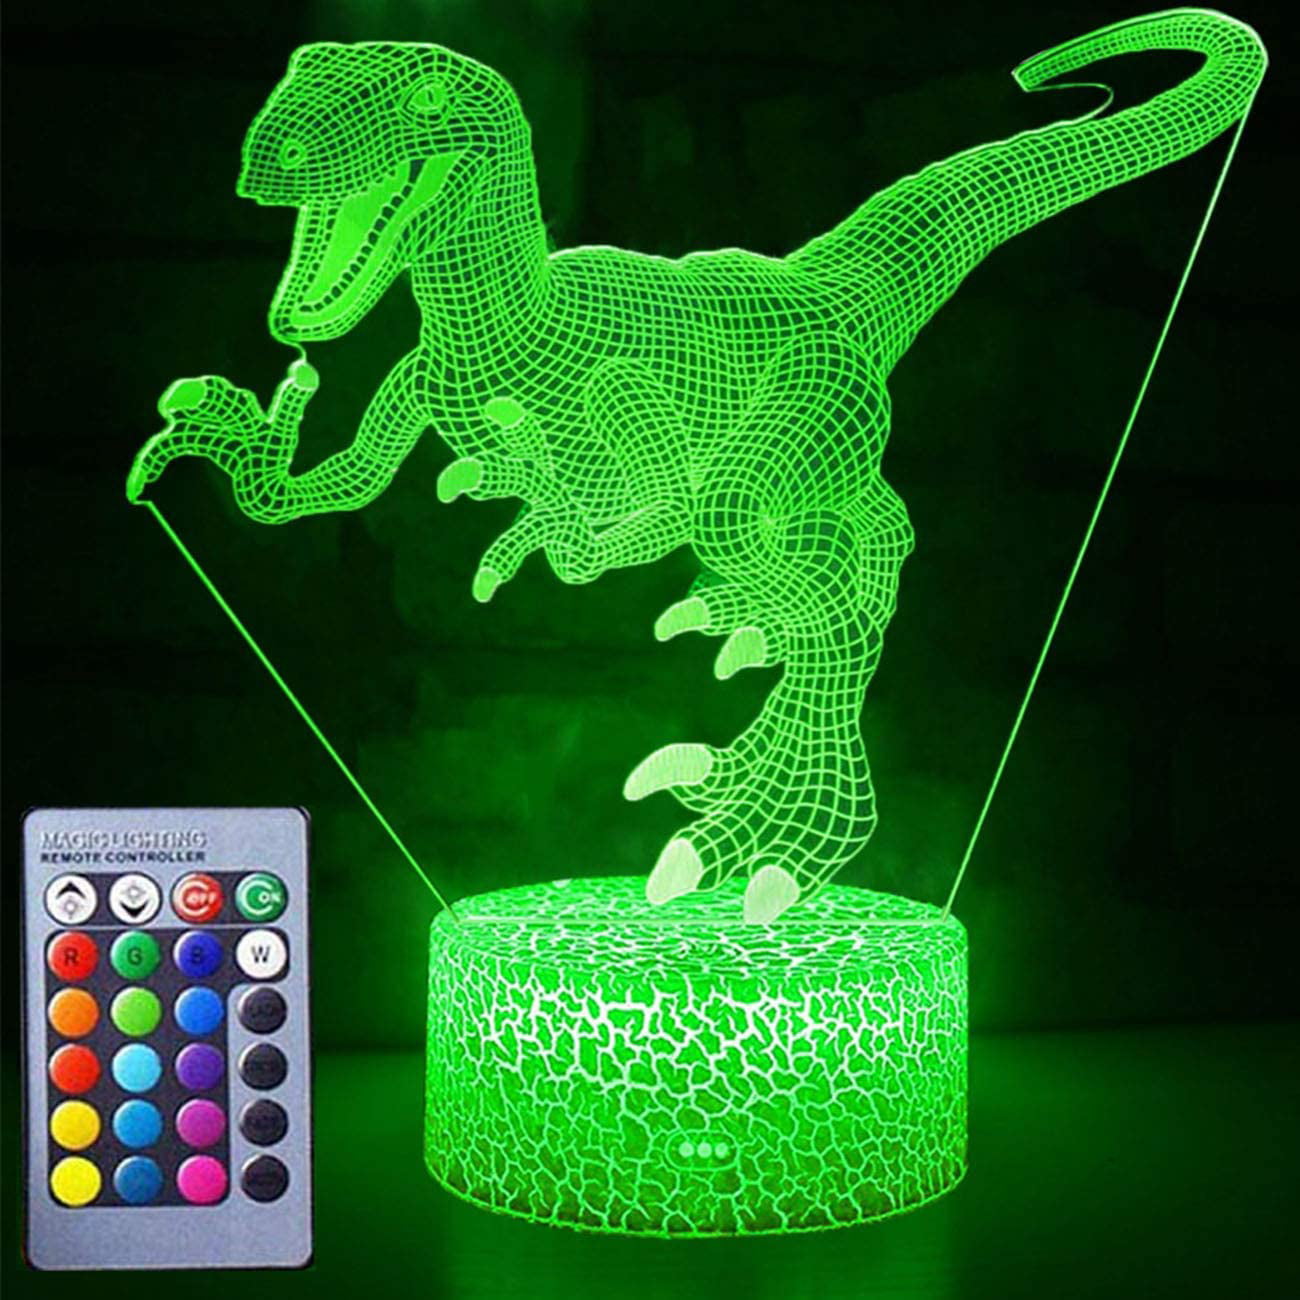 Details about   Dinosaur 3D Night Light 16 colors Change LED Desk Lamp Remote for Kids Toy GIFT 